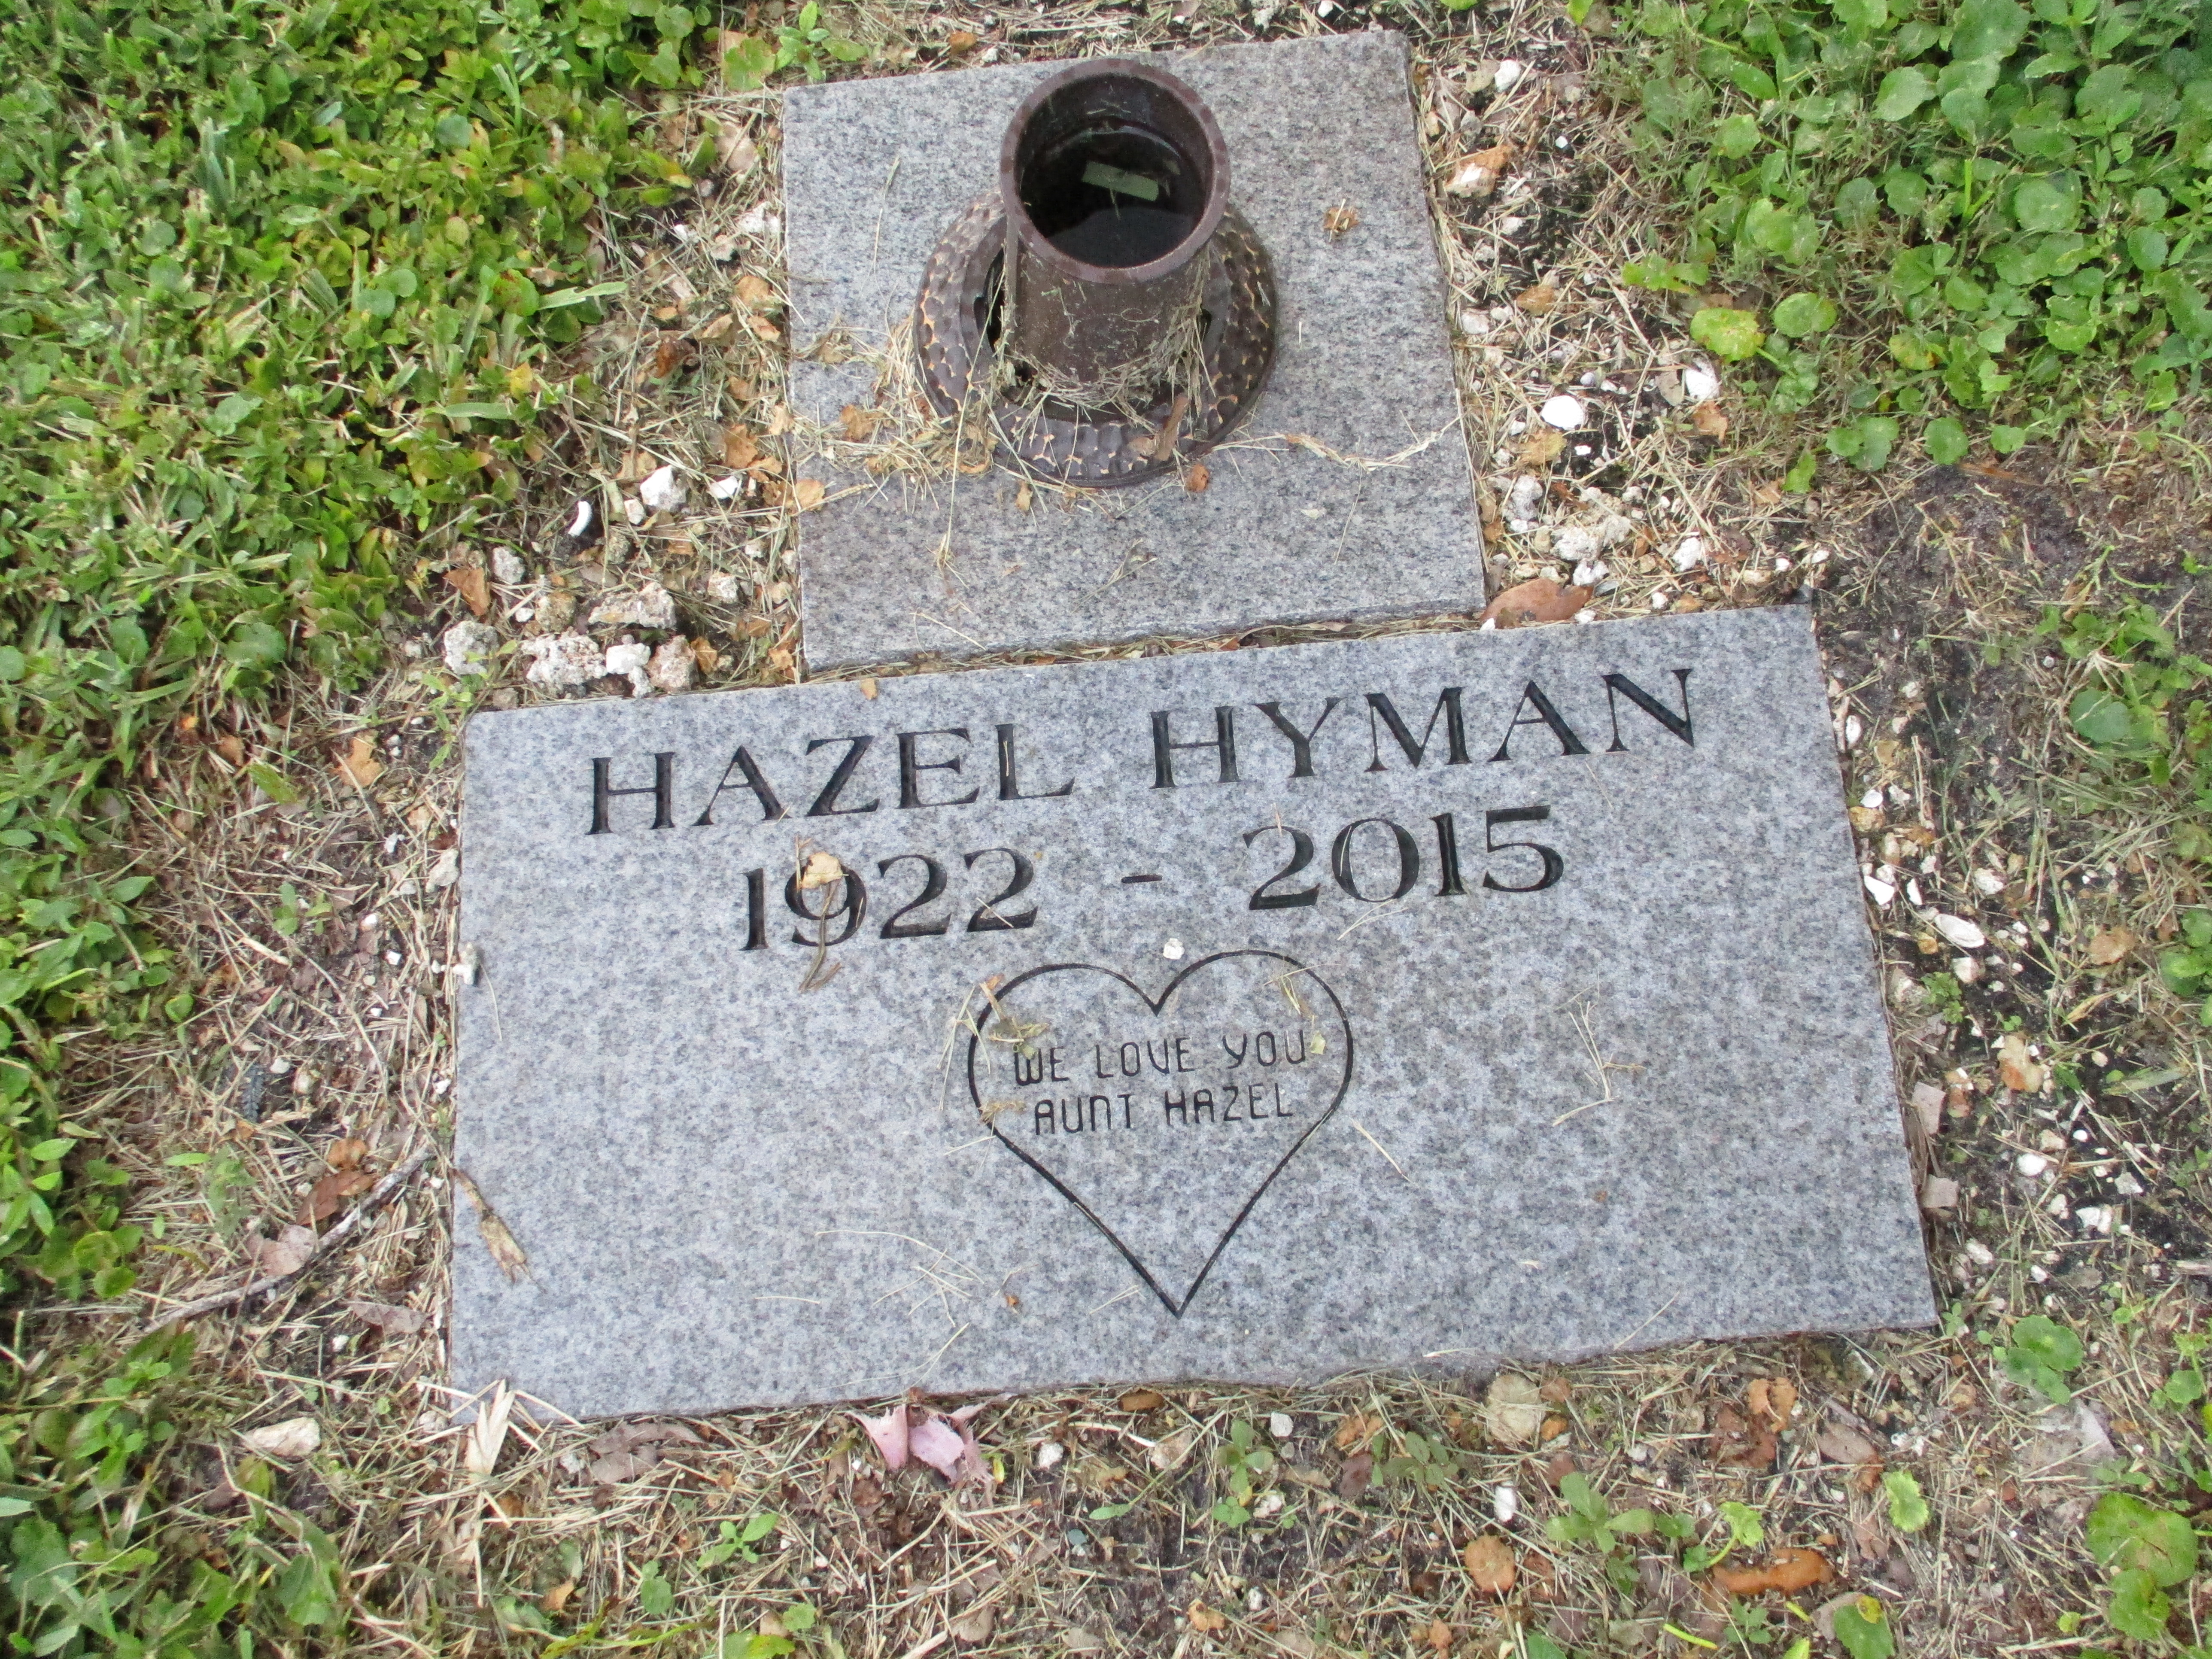 Hazel Hyman